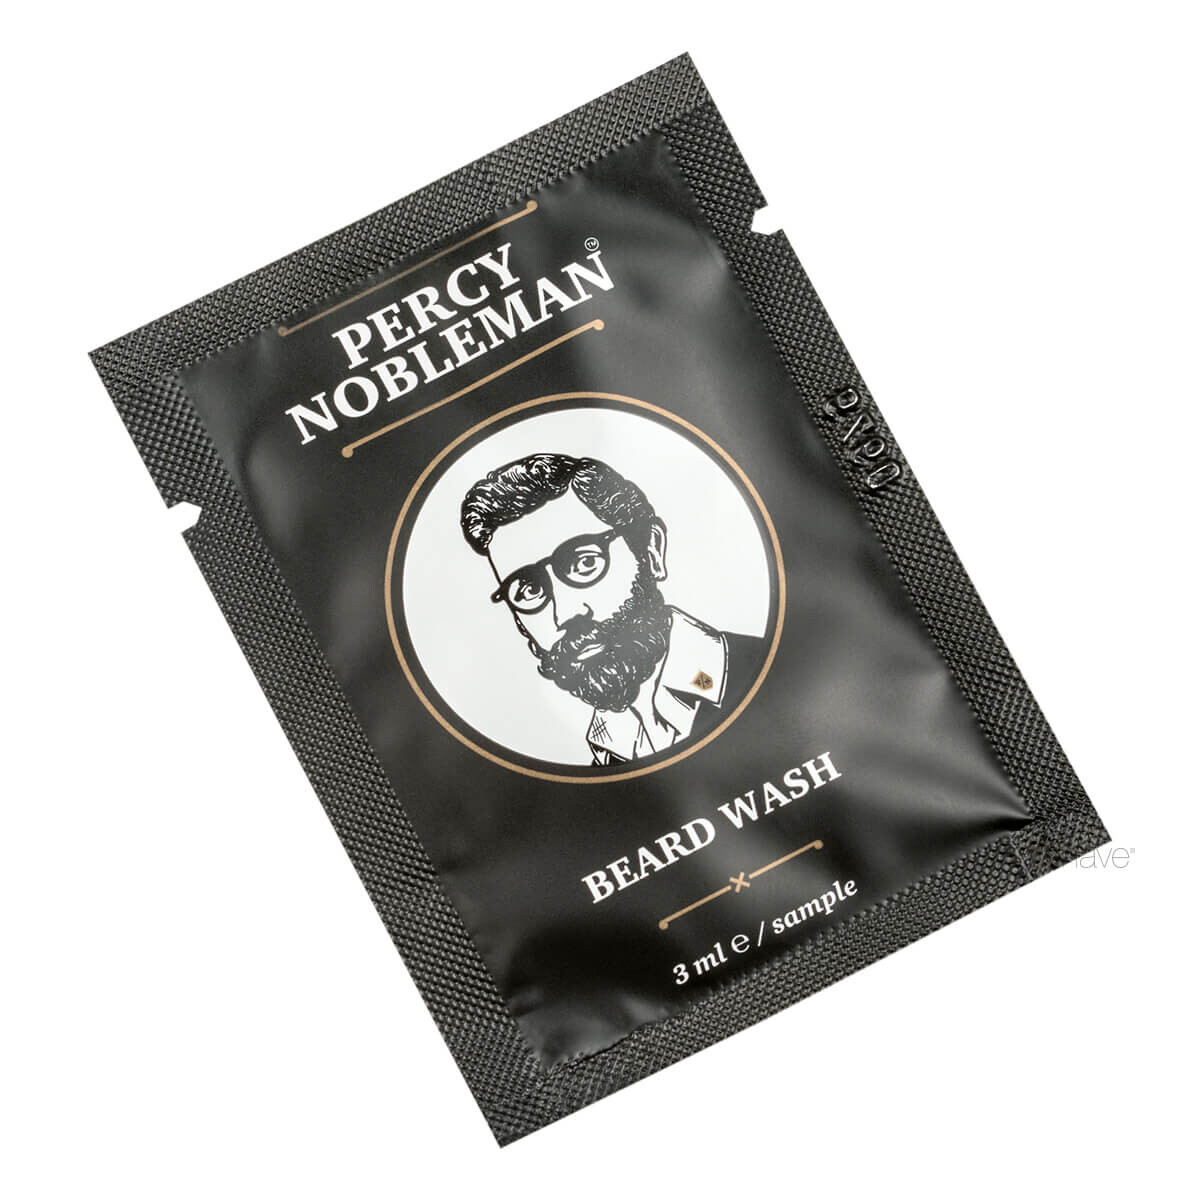 Percy Nobleman Beard Wash, SAMPLE, 3 ml.